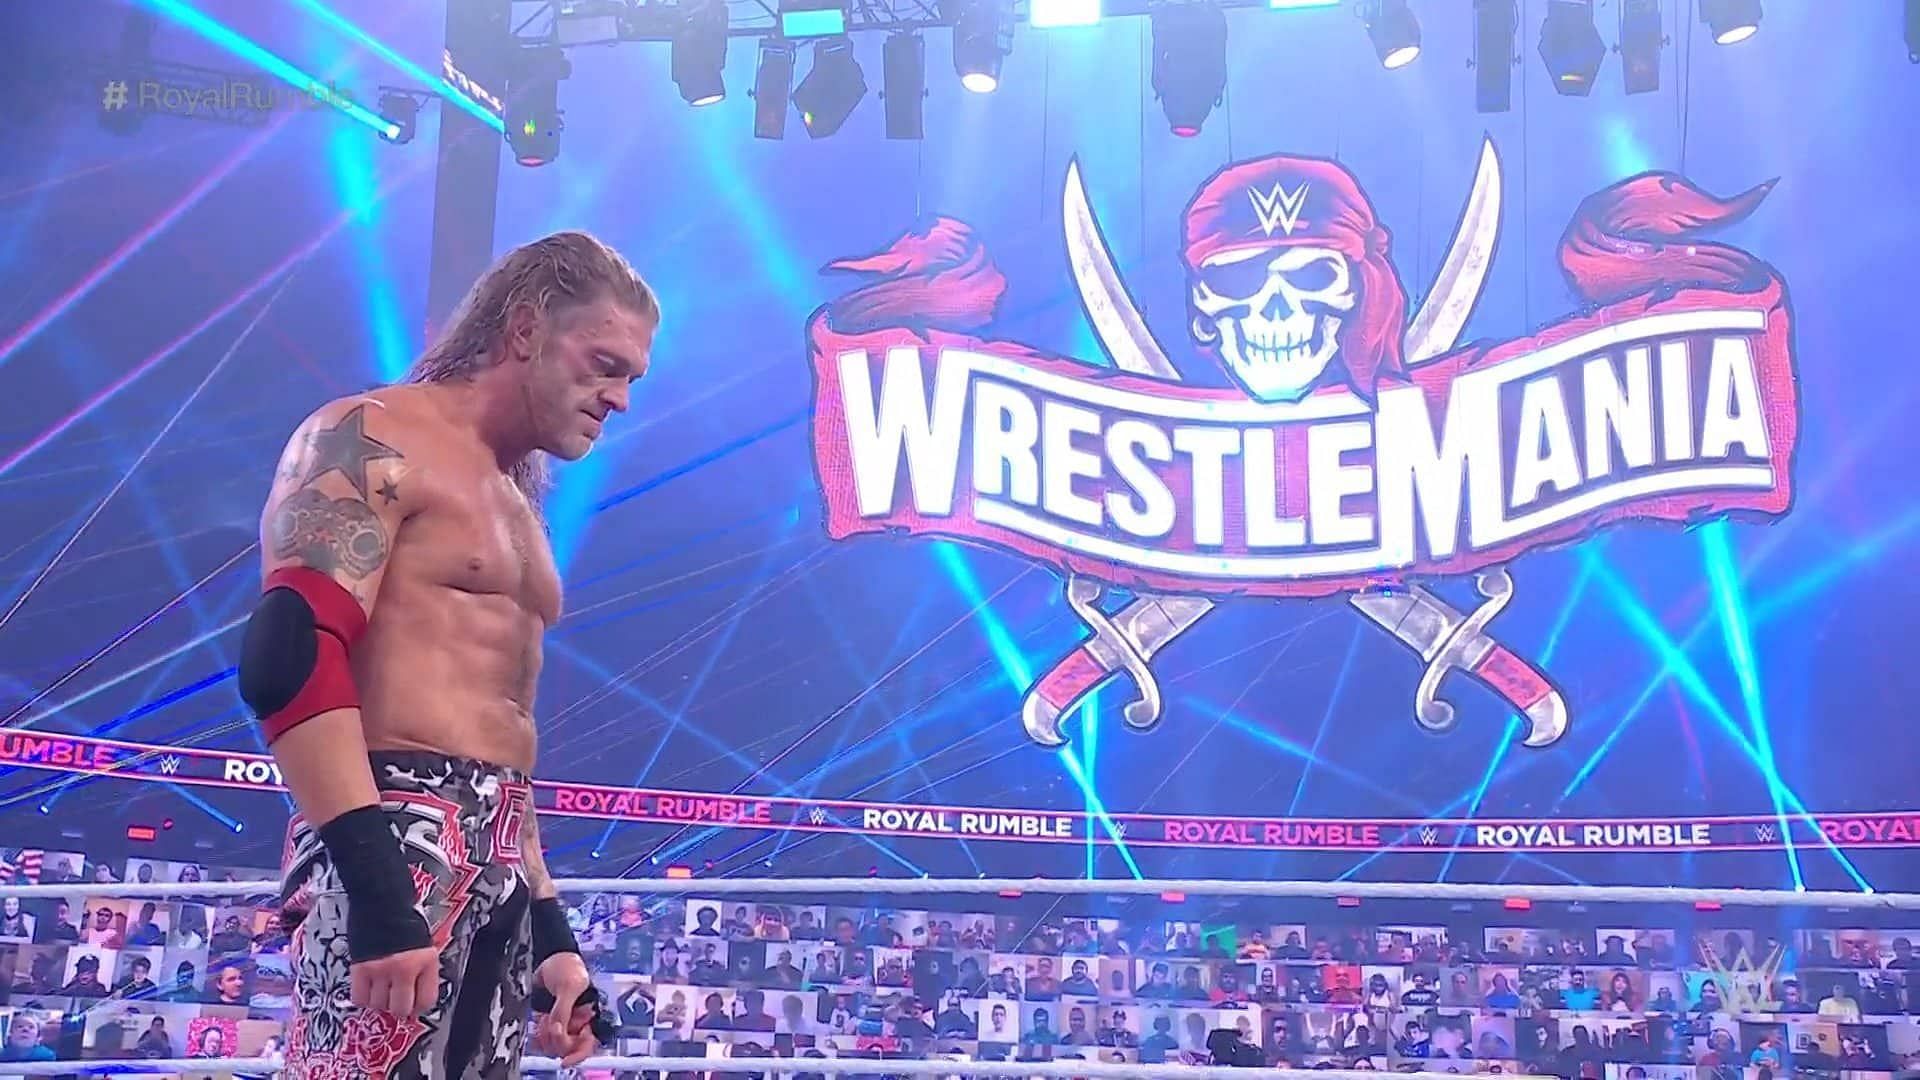 Edge won the WWE Royal Rumble twice